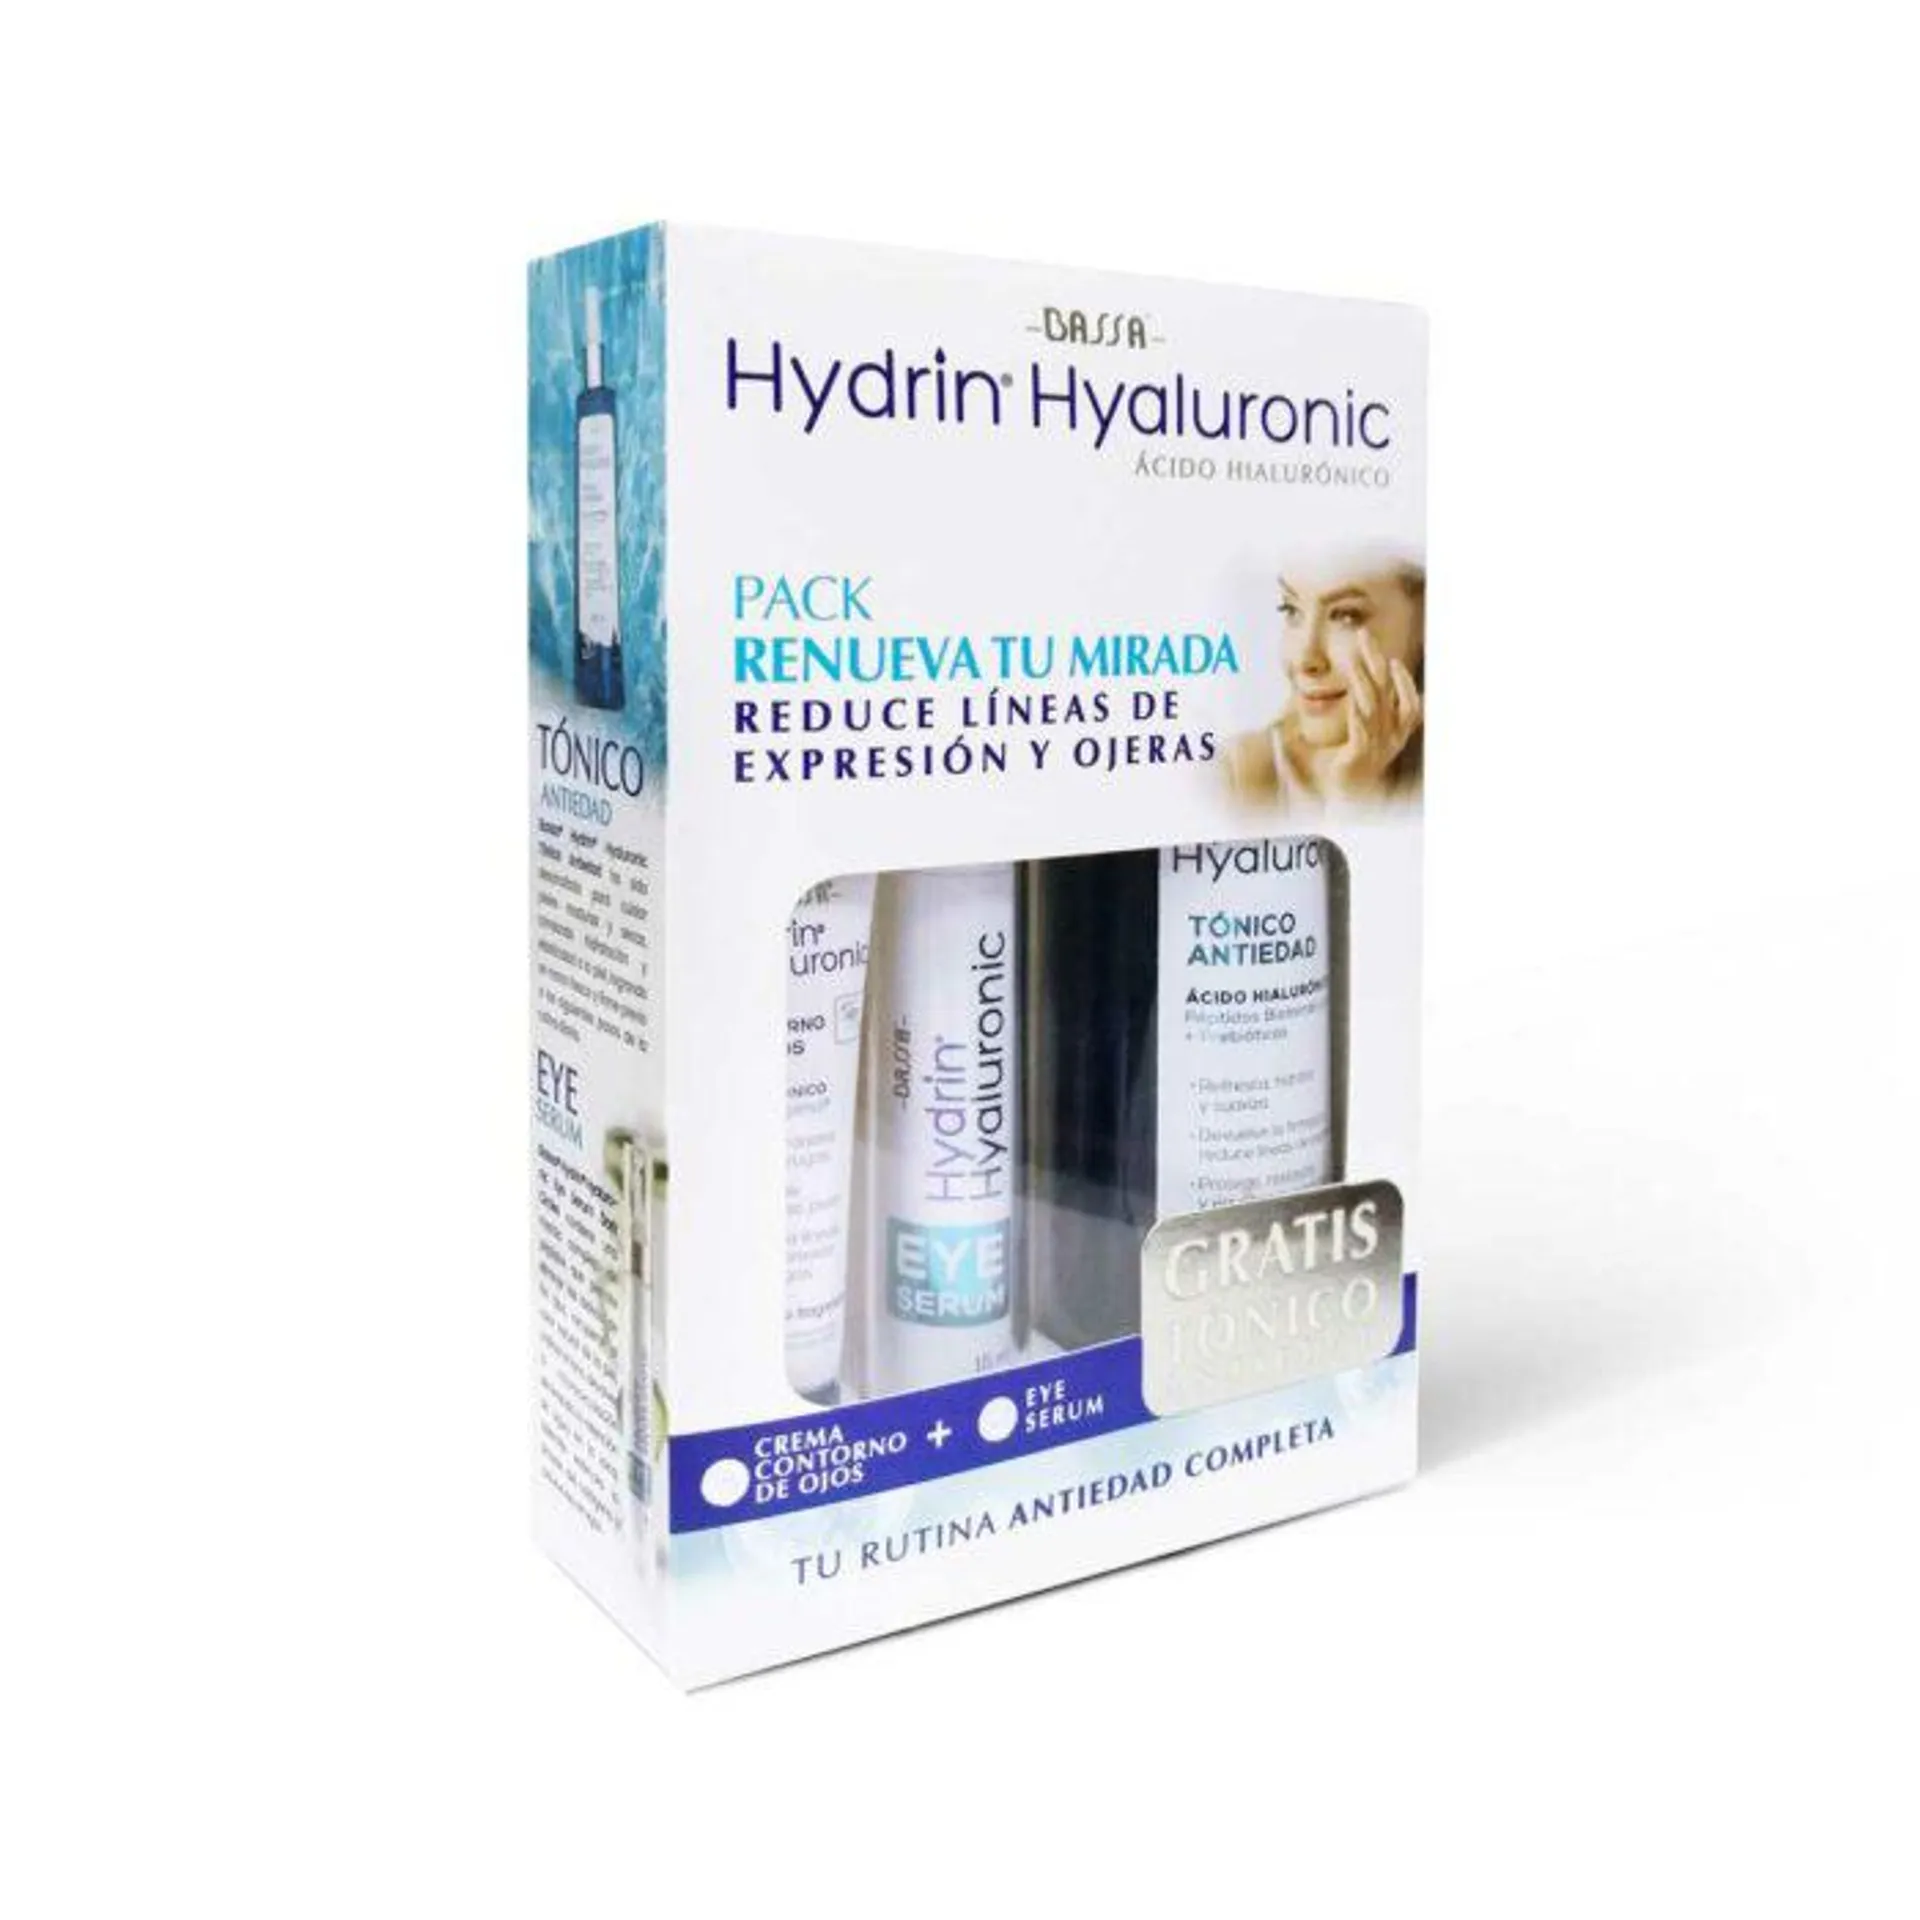 Hydrin Hyaluronic Pack Renueva tu Mirada